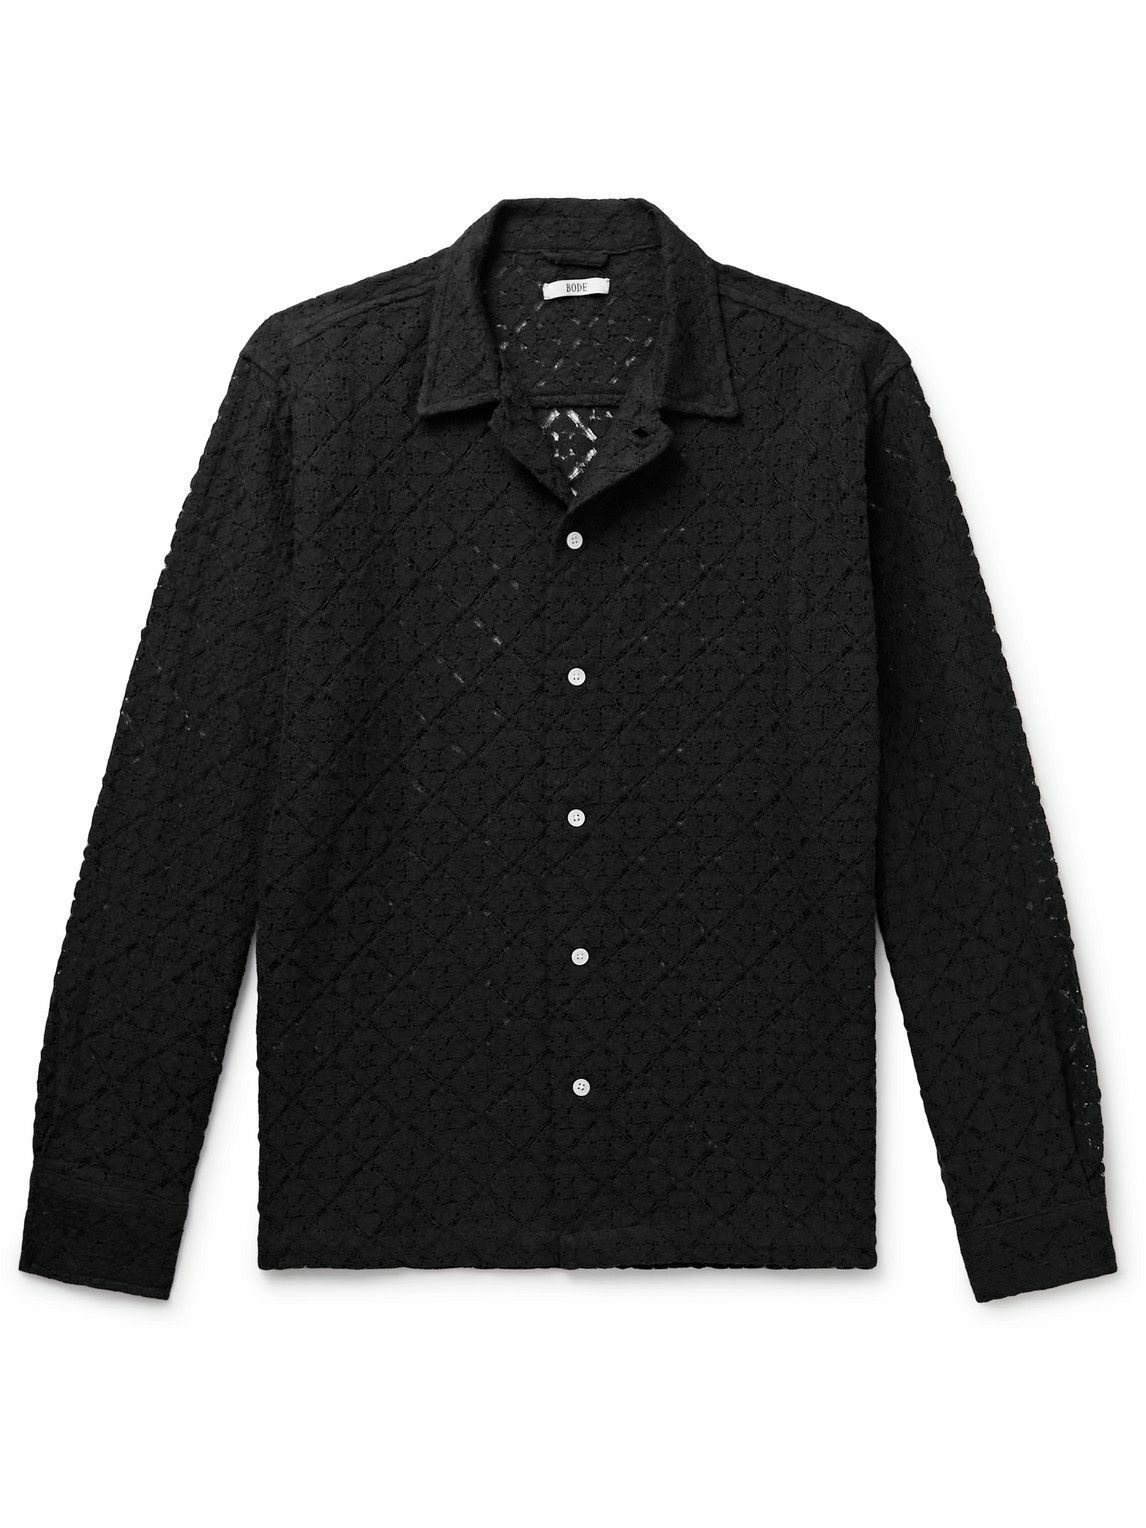 BODE - Cotton-Blend Lace Shirt - Black Bode